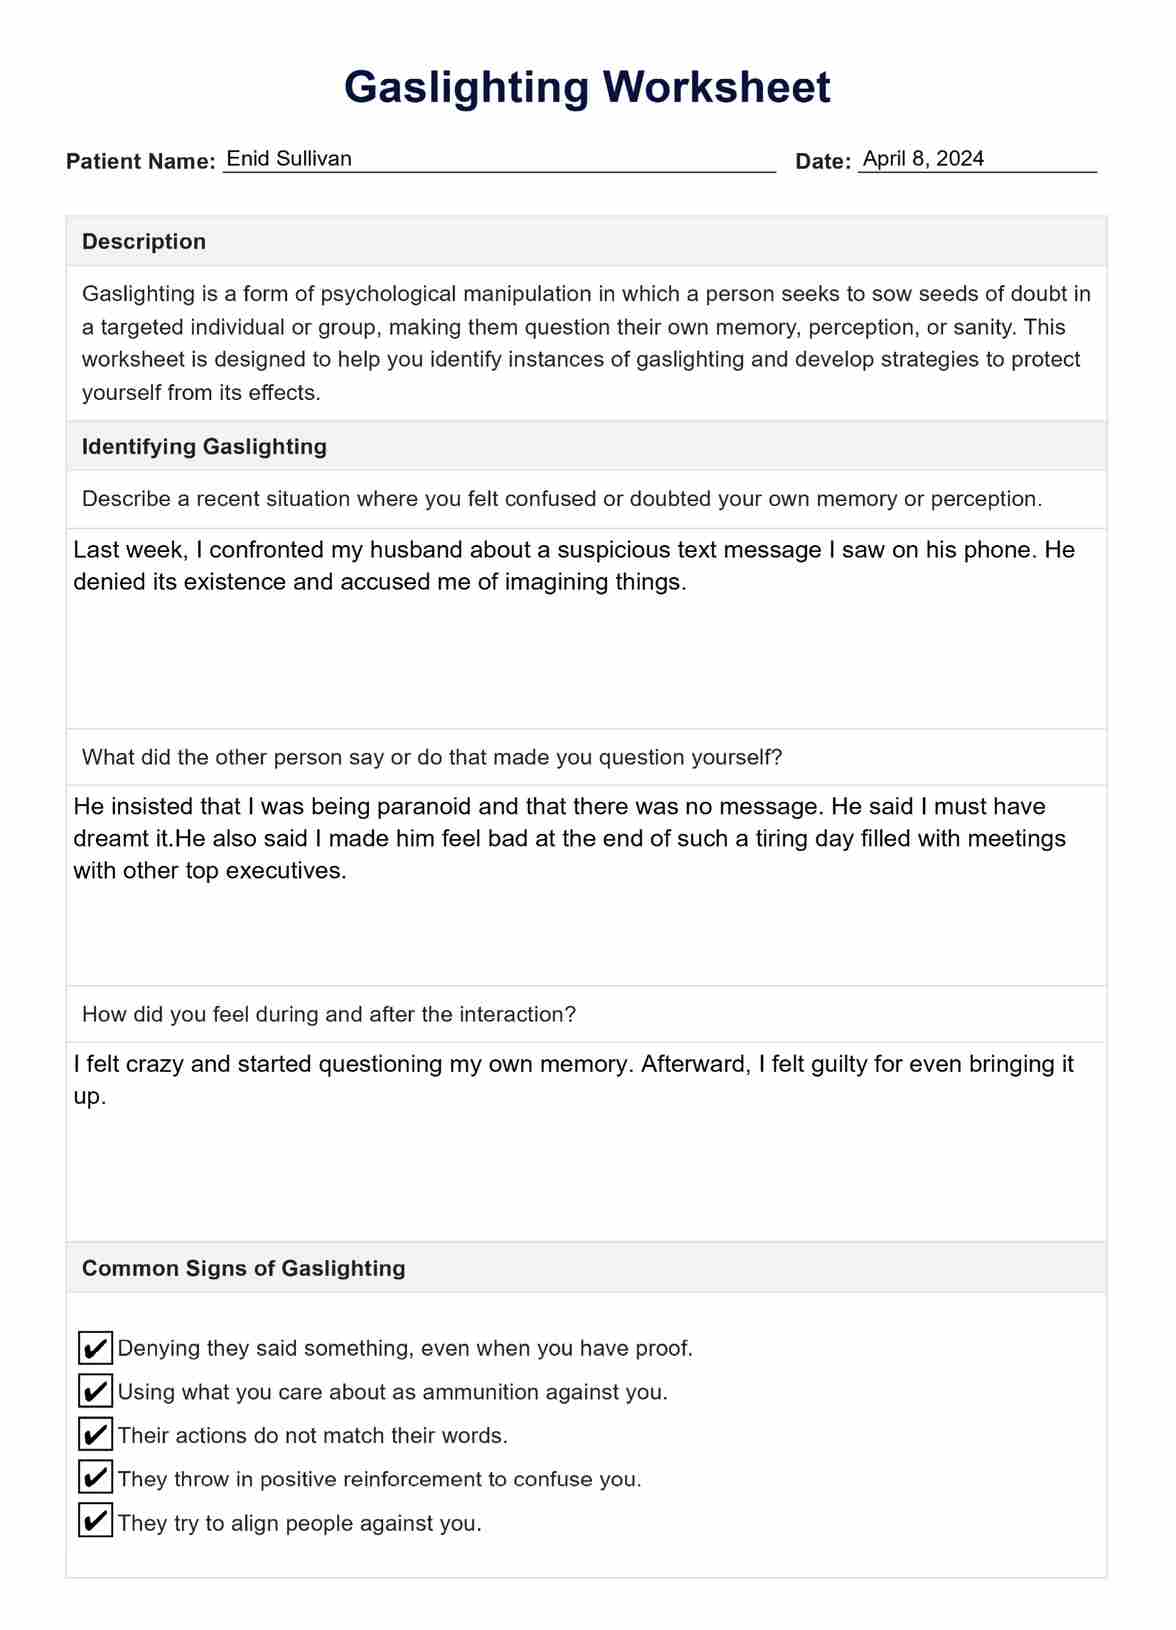 Gaslighting Worksheet PDF Example